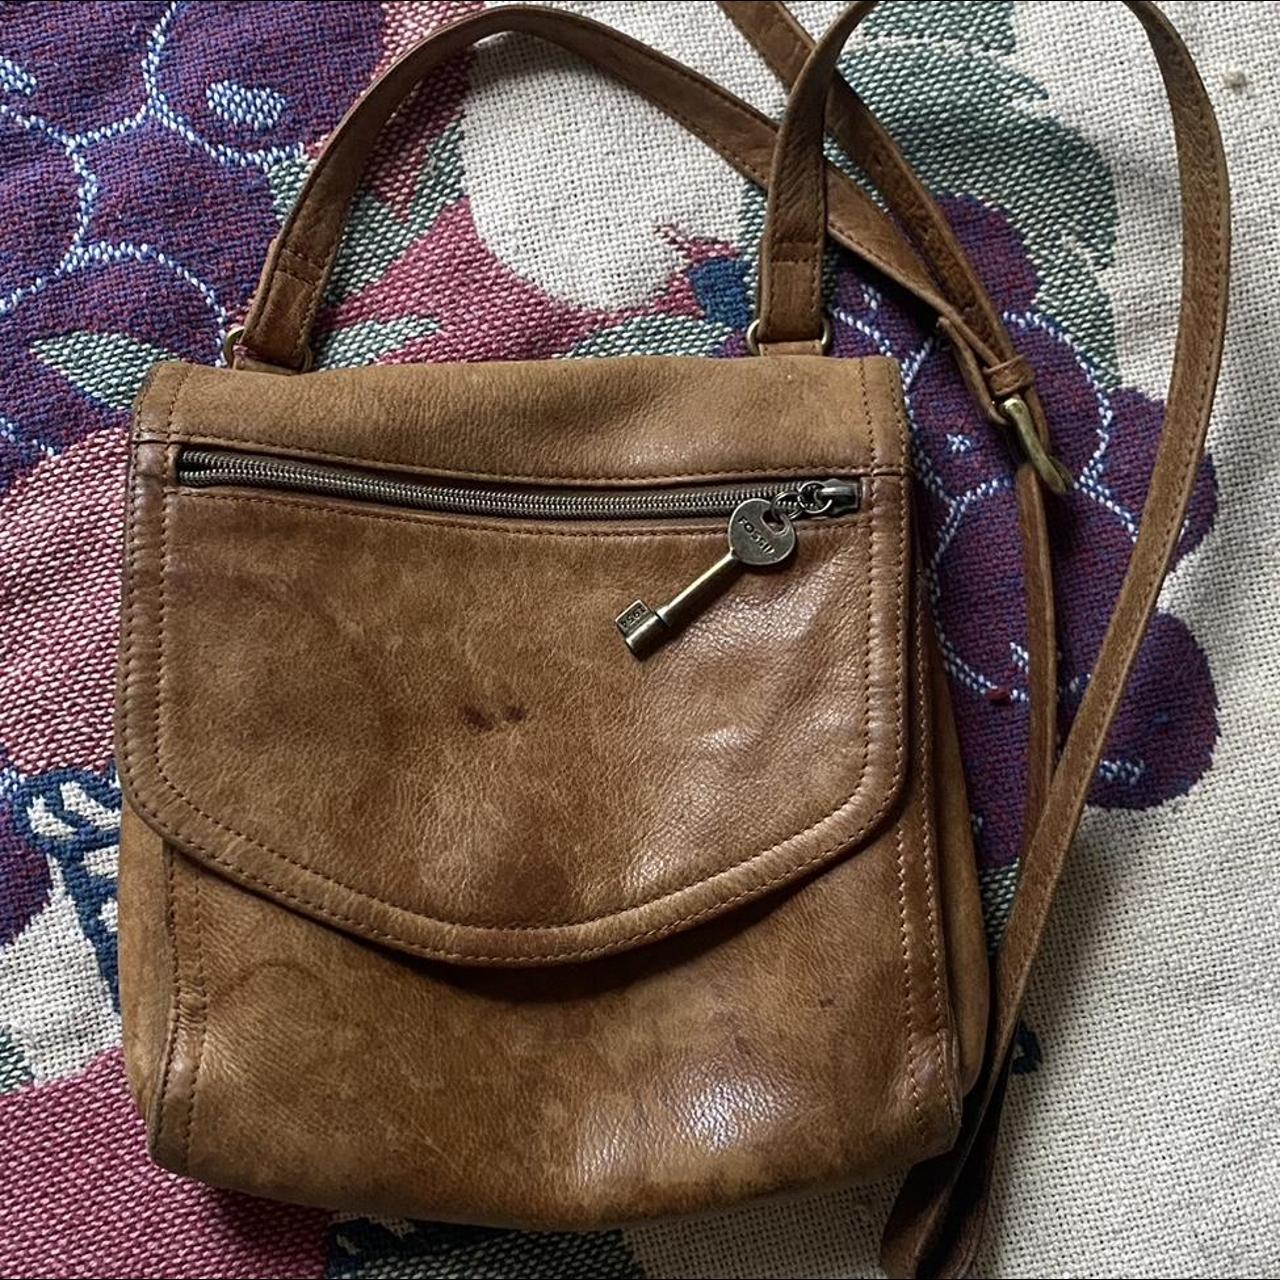 VNTG. FOSSIL KEY Two Toned Brown Leather Bag #75082 Shoulder Cross Body  Handbag $15.99 - PicClick